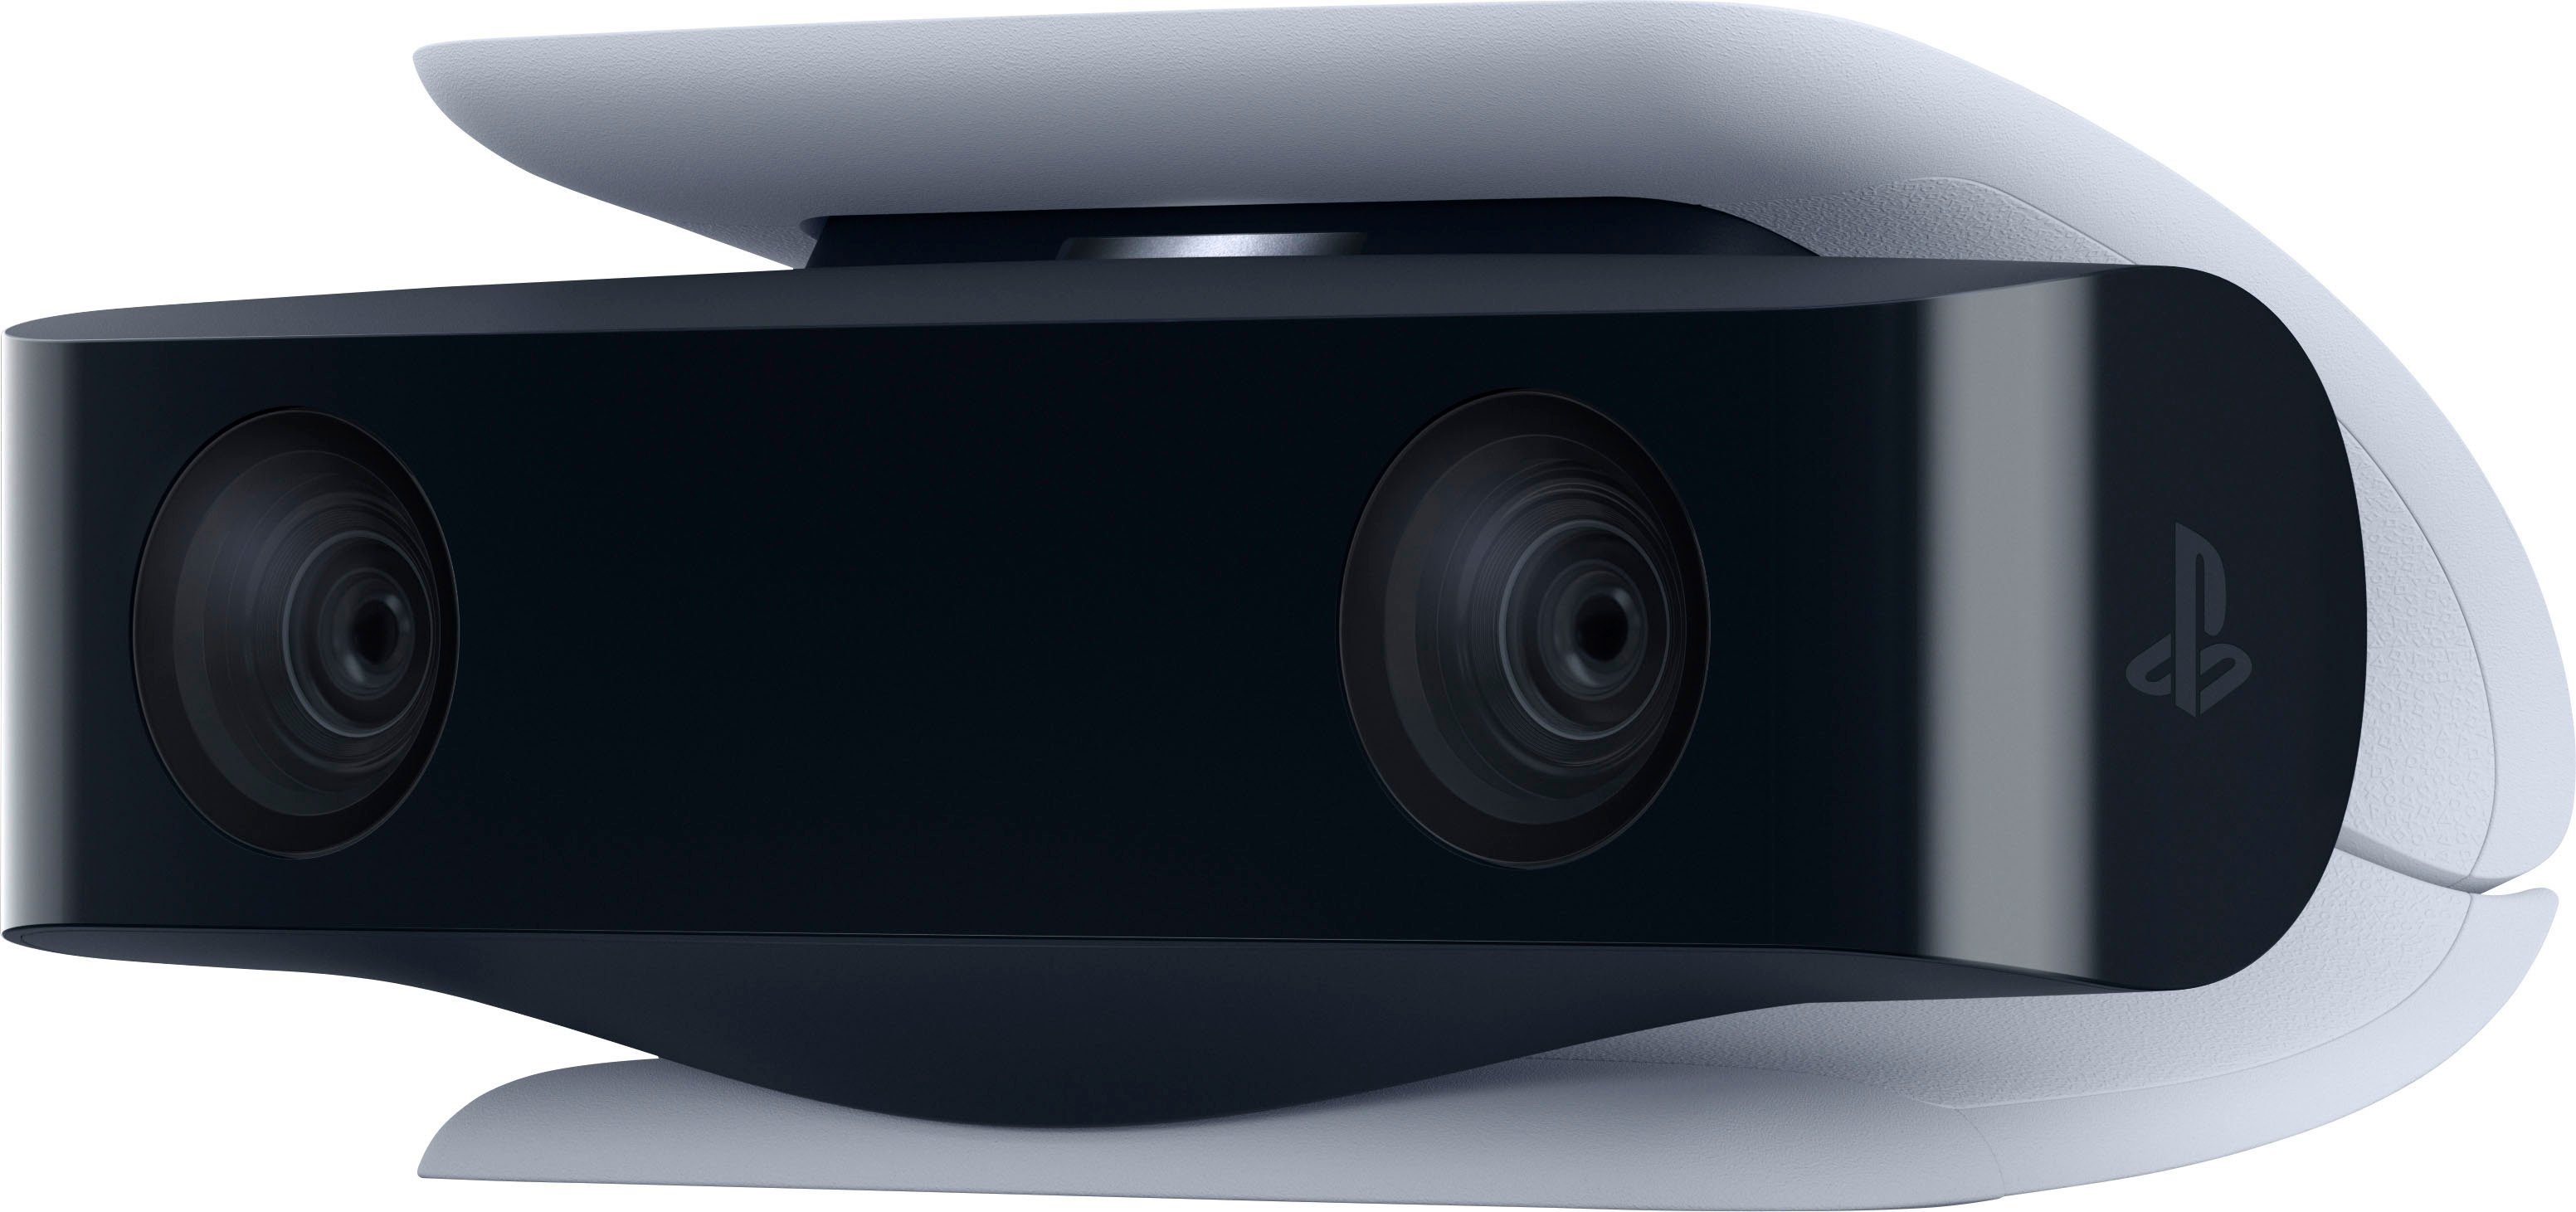 PlayStation 5 HD-Kamera (Full HD), Flüssige und scharfe Aufnahmen in Full-HD